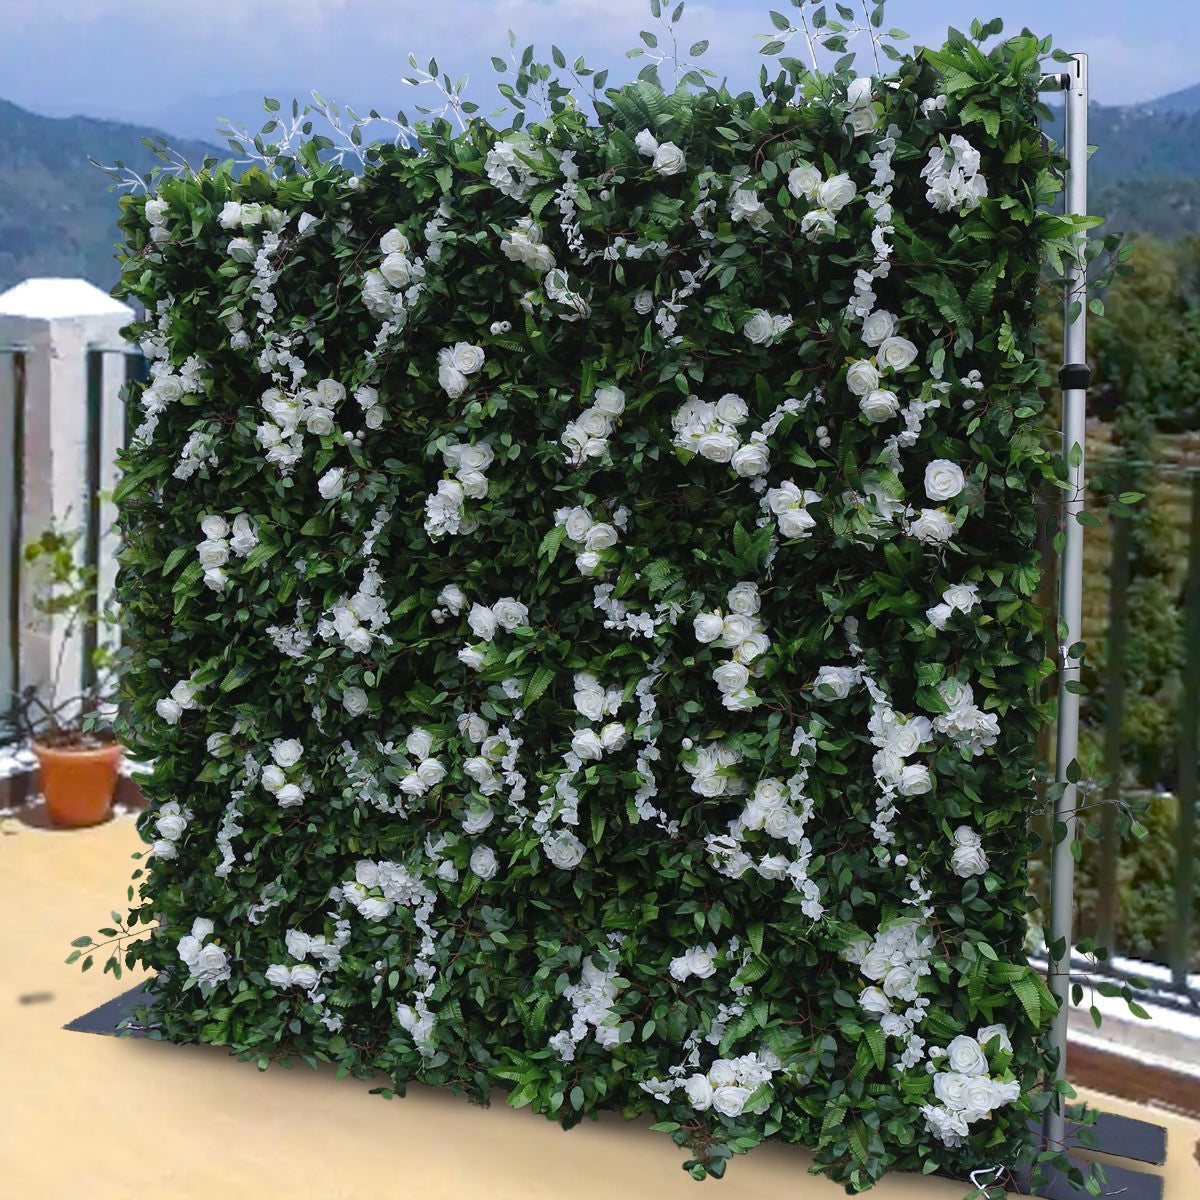 3D Artificial Flower Wall Arrangement Wedding Party Birthday Backdrop Decor HQ9027